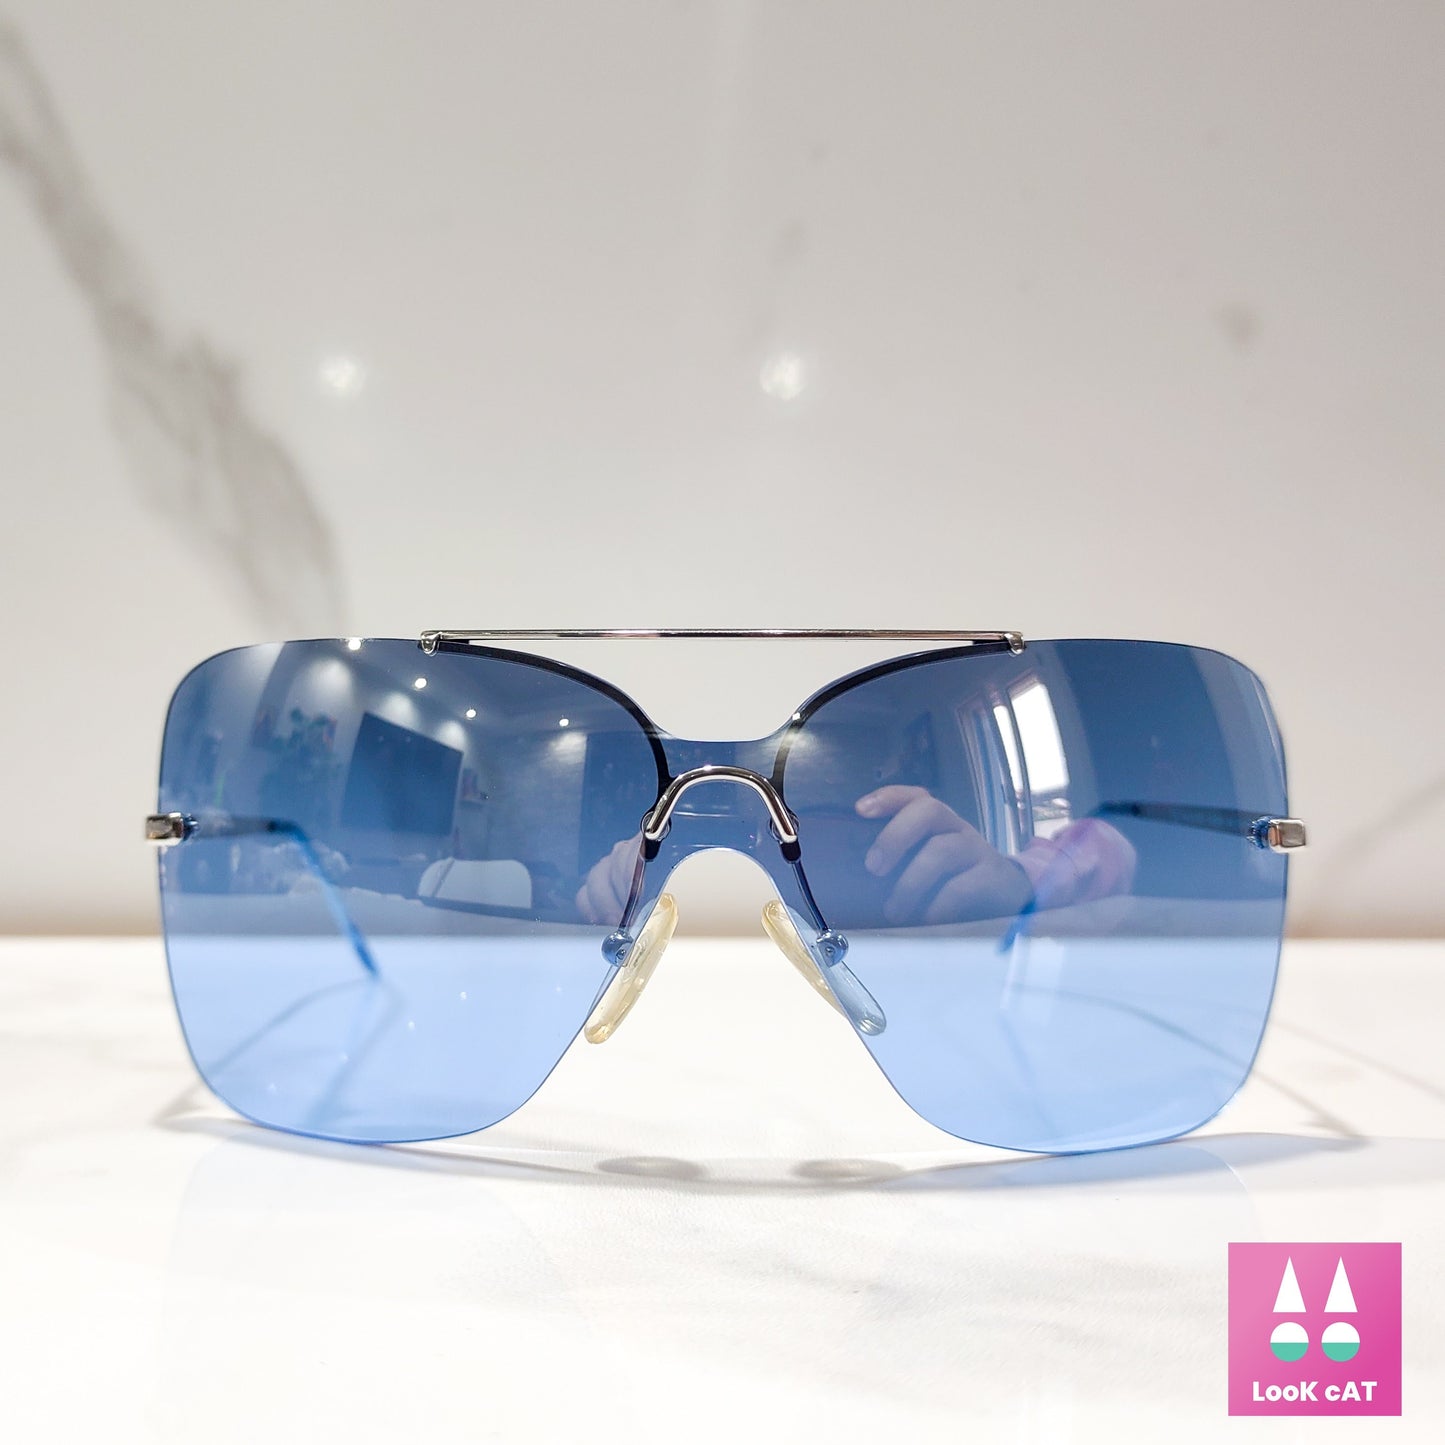 Christian Dior MOTARD occhiali da sole vintage occhiali gafas y2k made in Italy avvolgente maschera scudo avvolgente